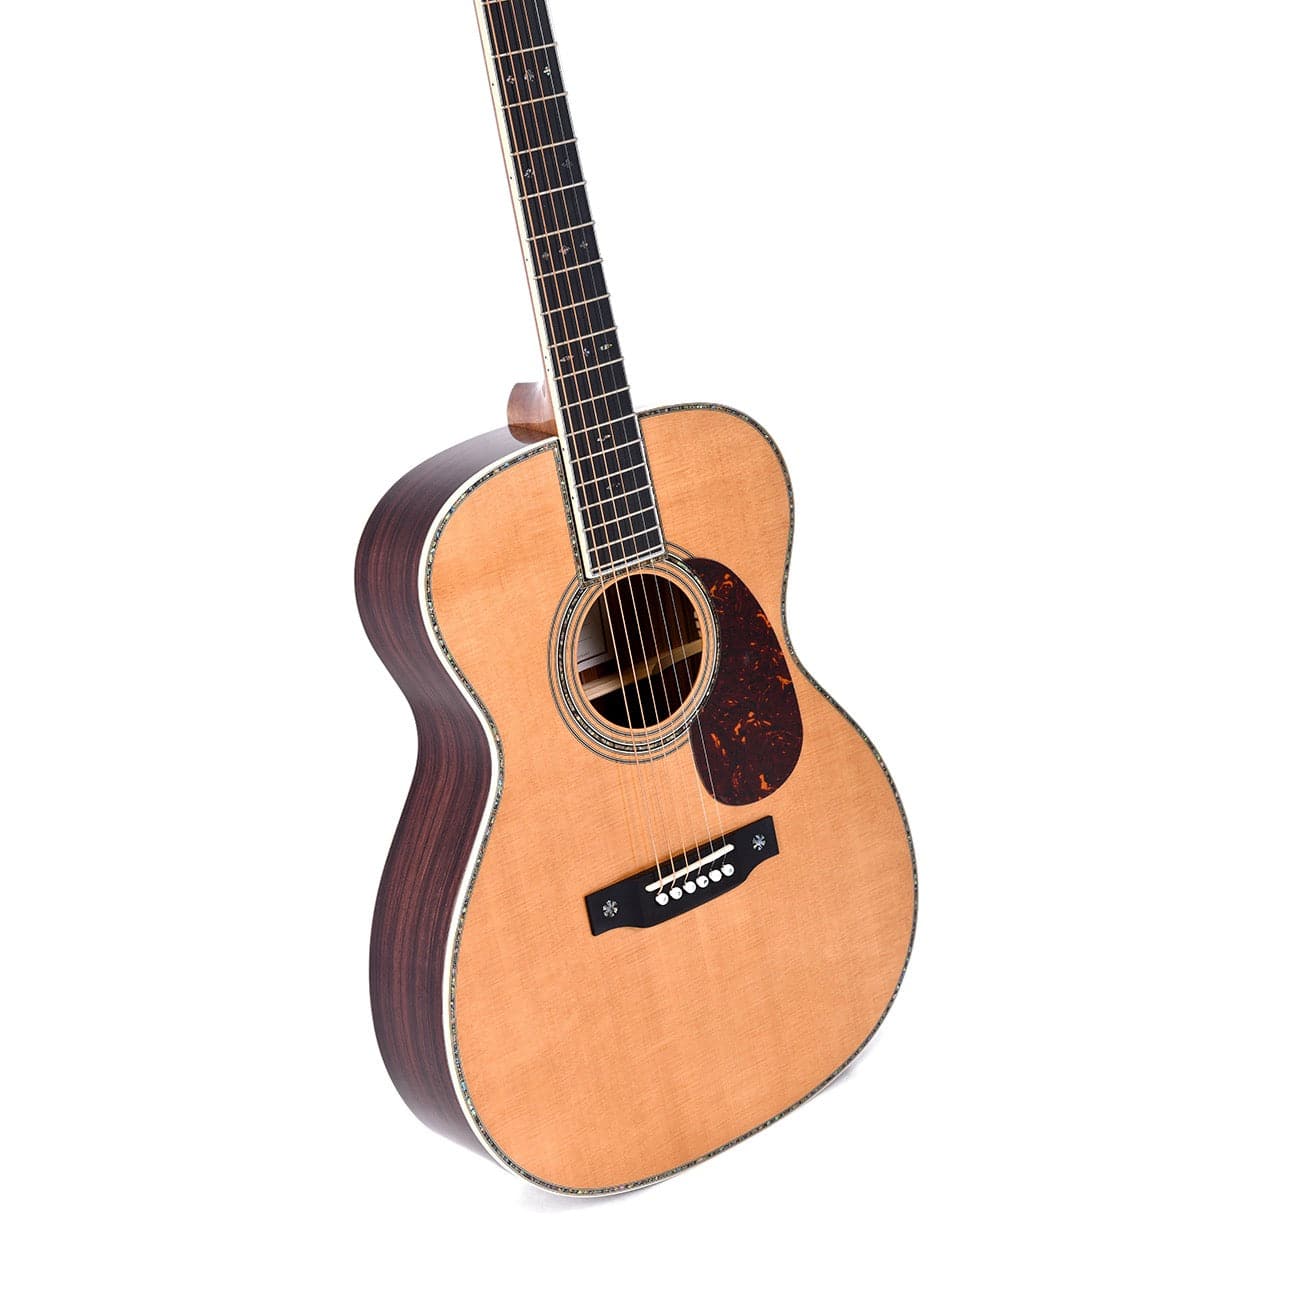 Sigma 000T-42 Acoustic Guitar - Natural